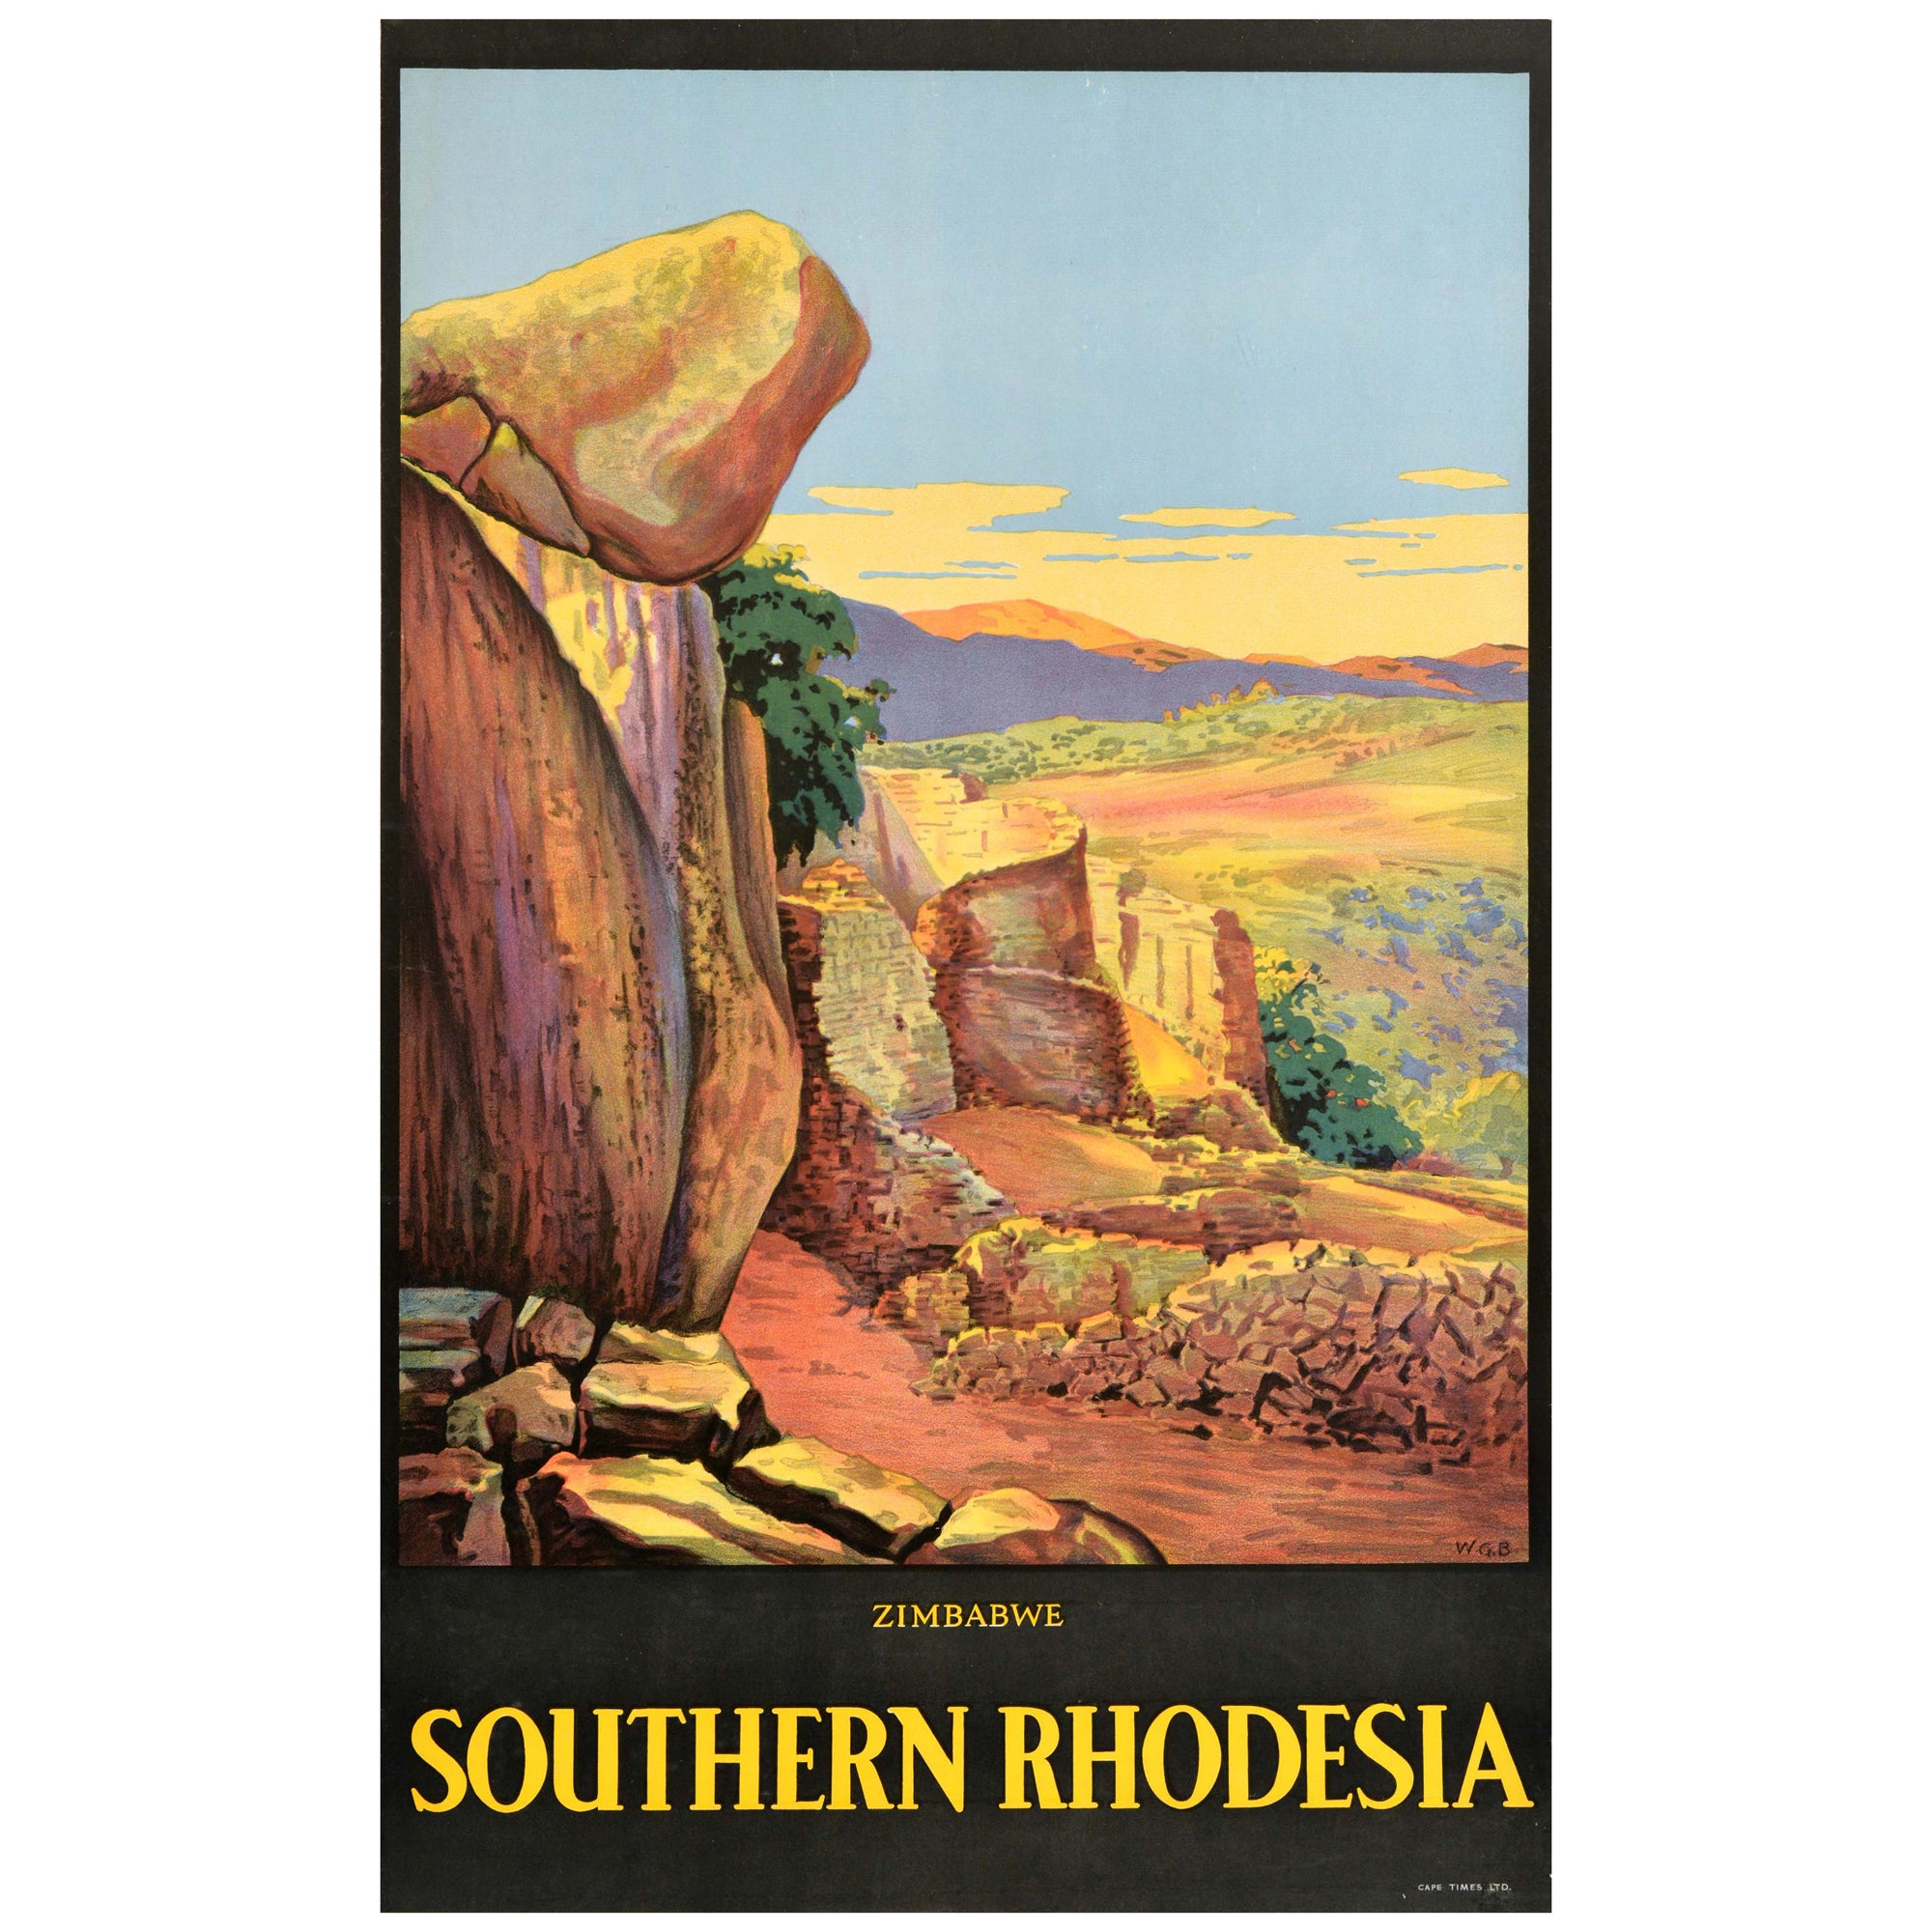 Original Vintage Africa Travel Poster Southern Rhodesia Zimbabwe Ancient City